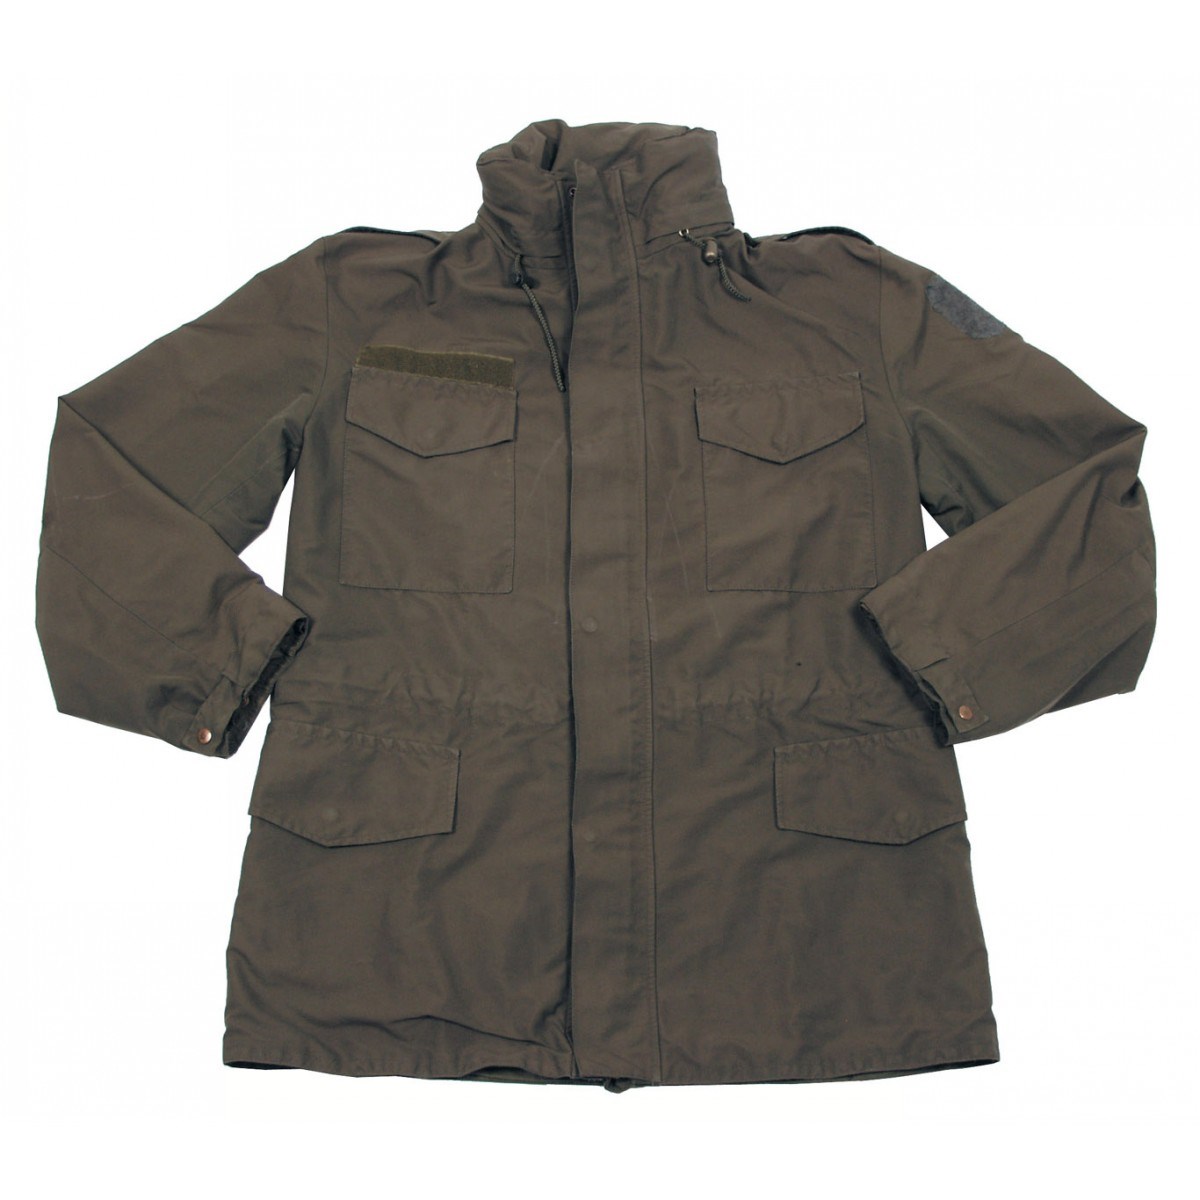 AUSTRIA GoreTex jacket OLIVE used (max chest 100cm) Austrian Army 91036700 L-11